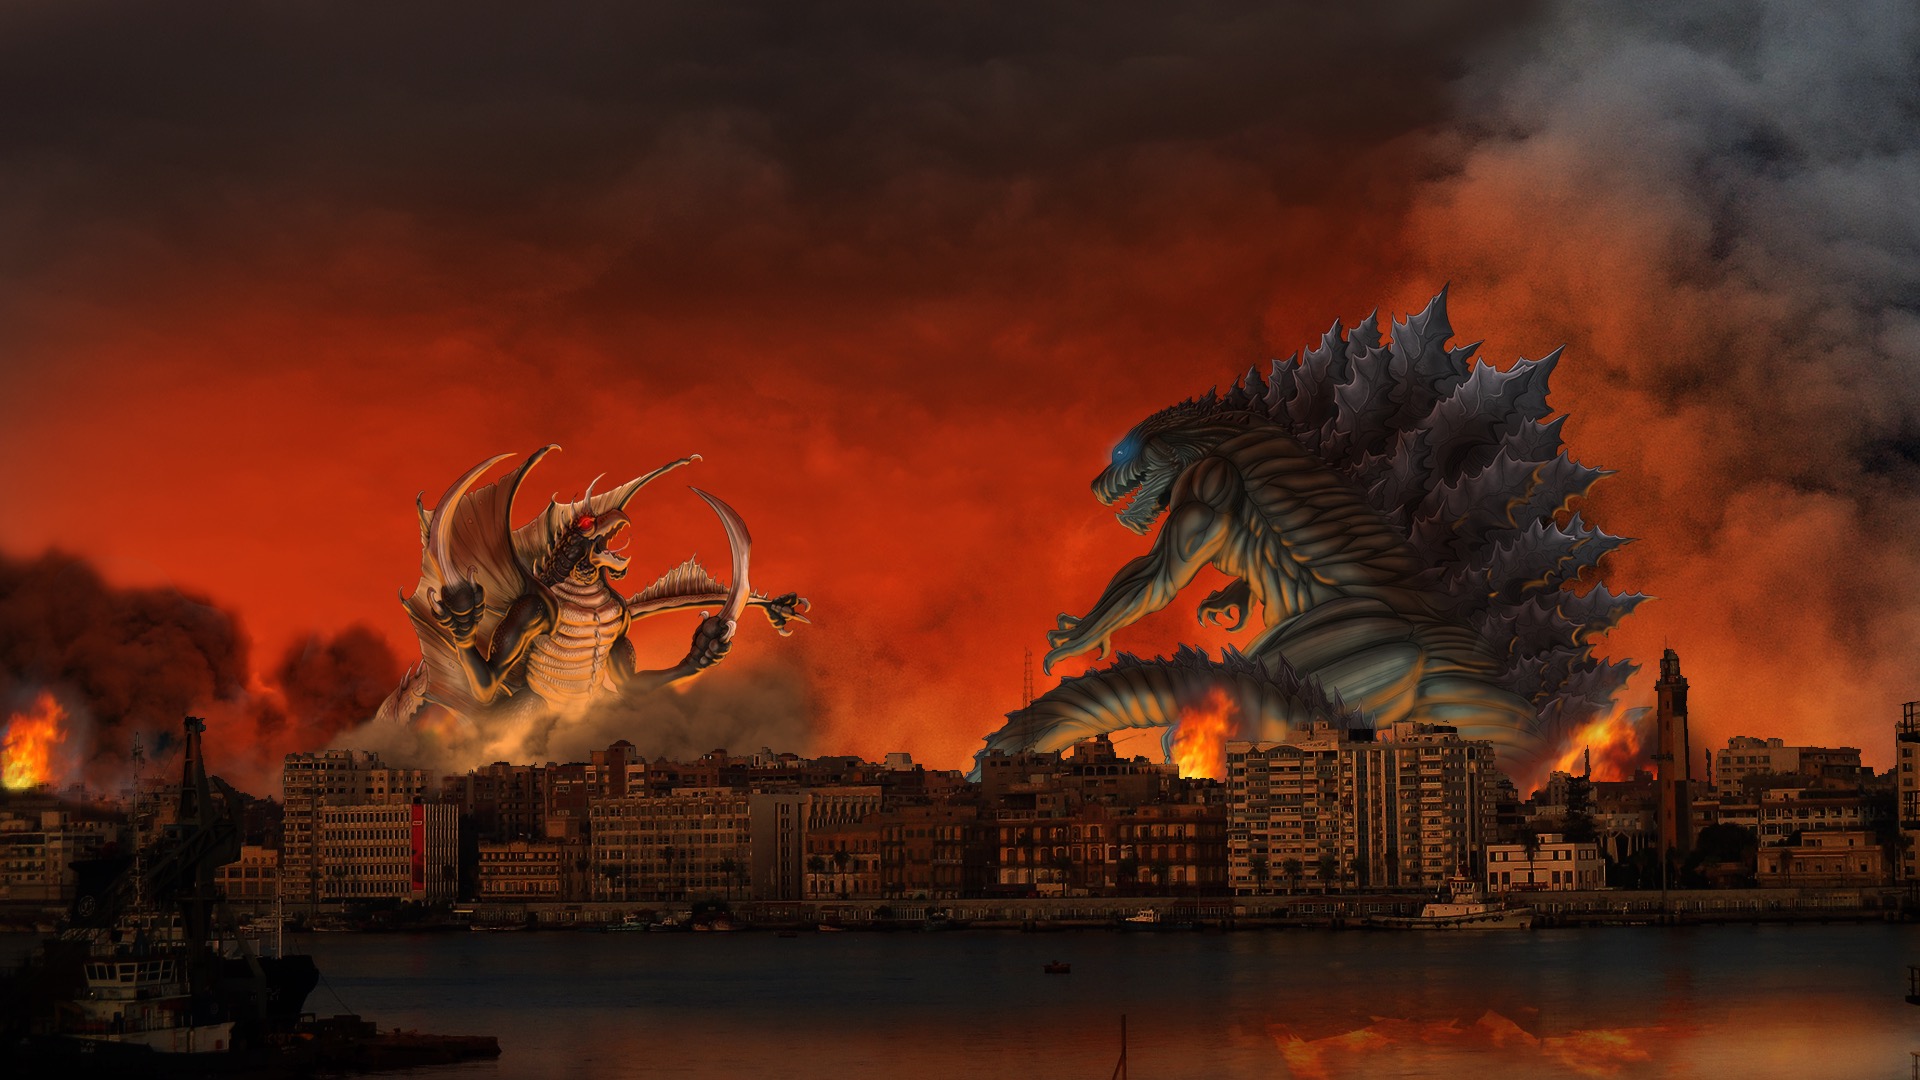 Godzilla Earth vs Upscaled Legendary Godzilla